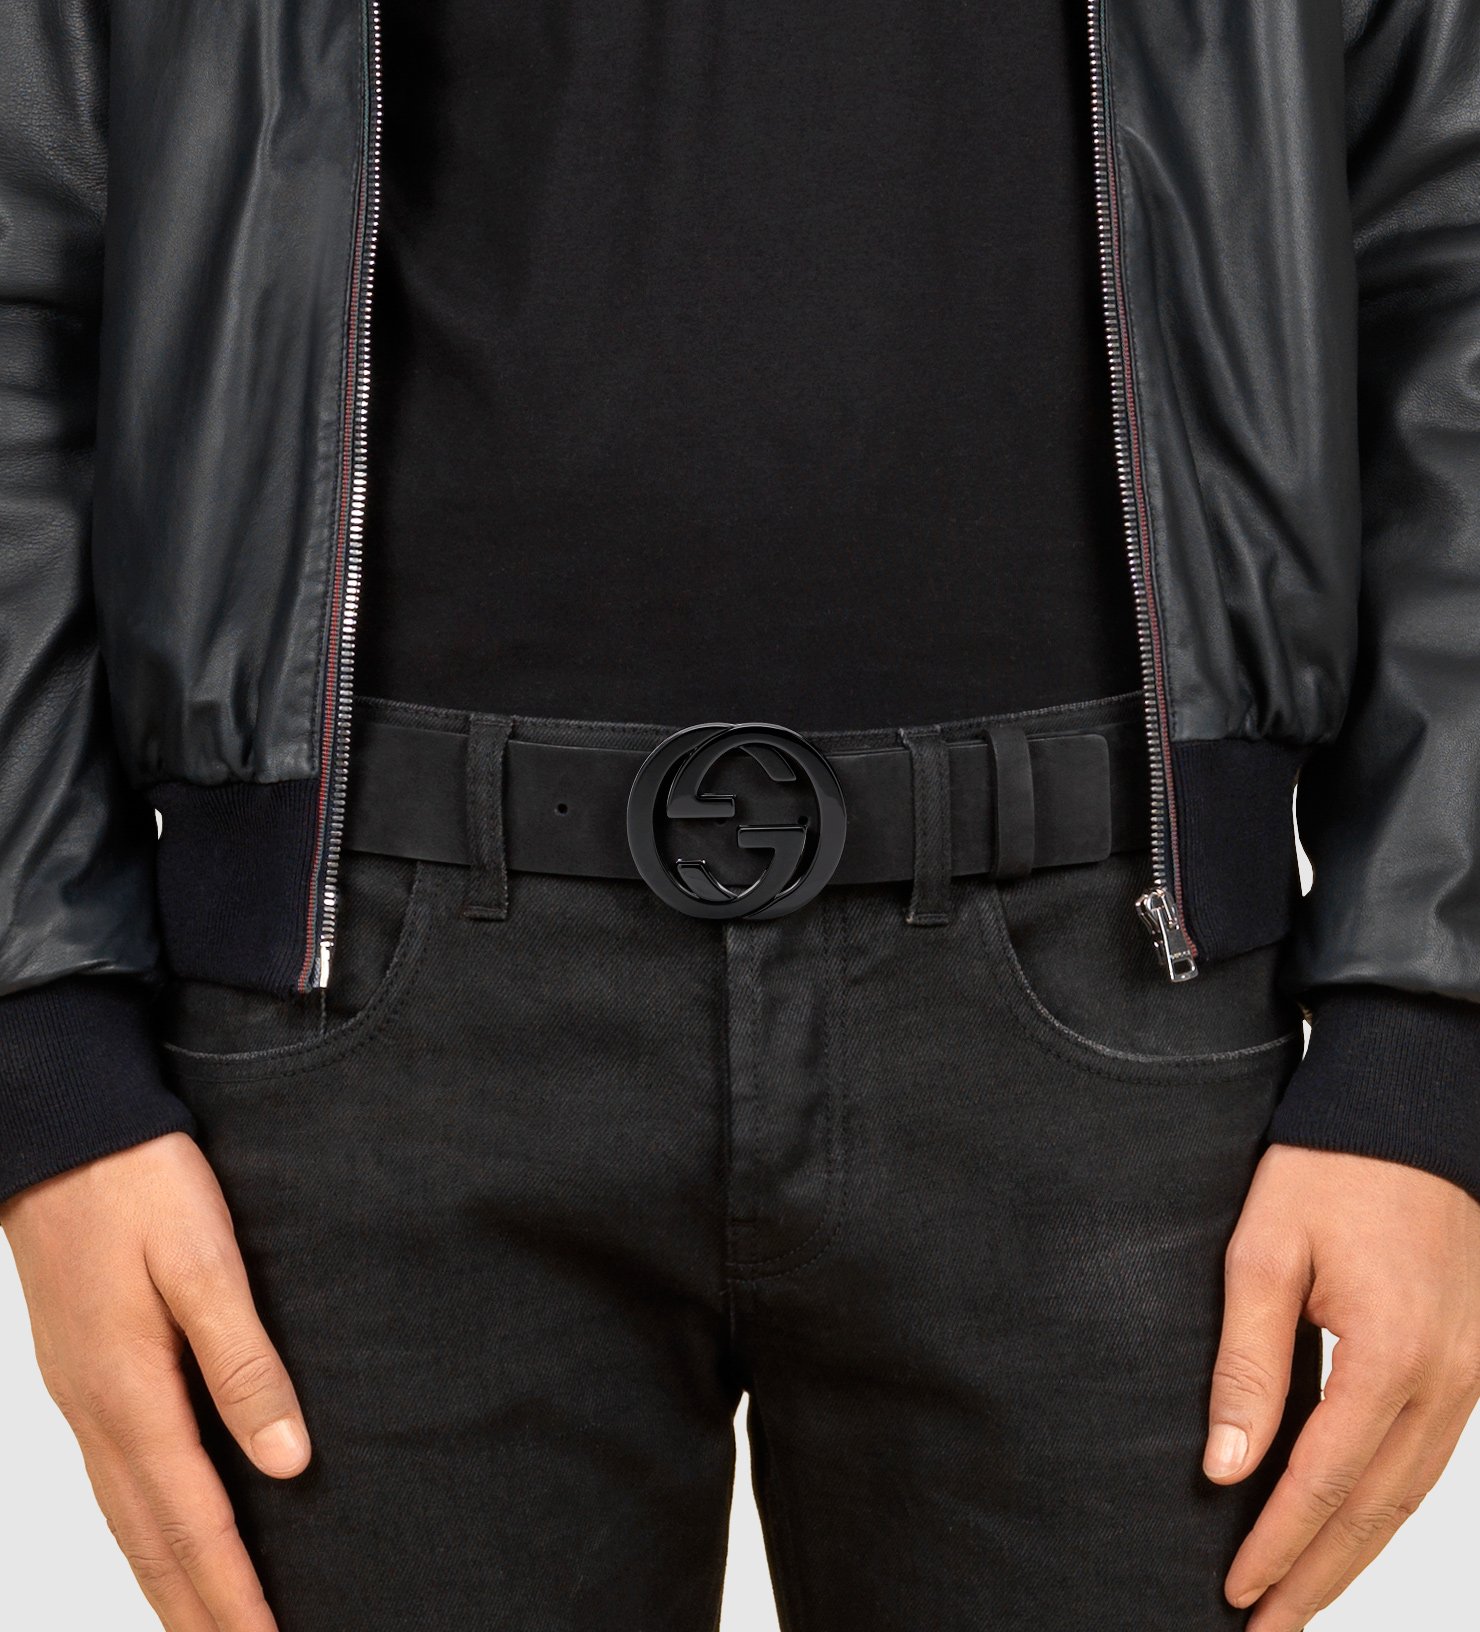 Lyst - Gucci Black Suede Belt With Interlocking G Buckle in Black for Men